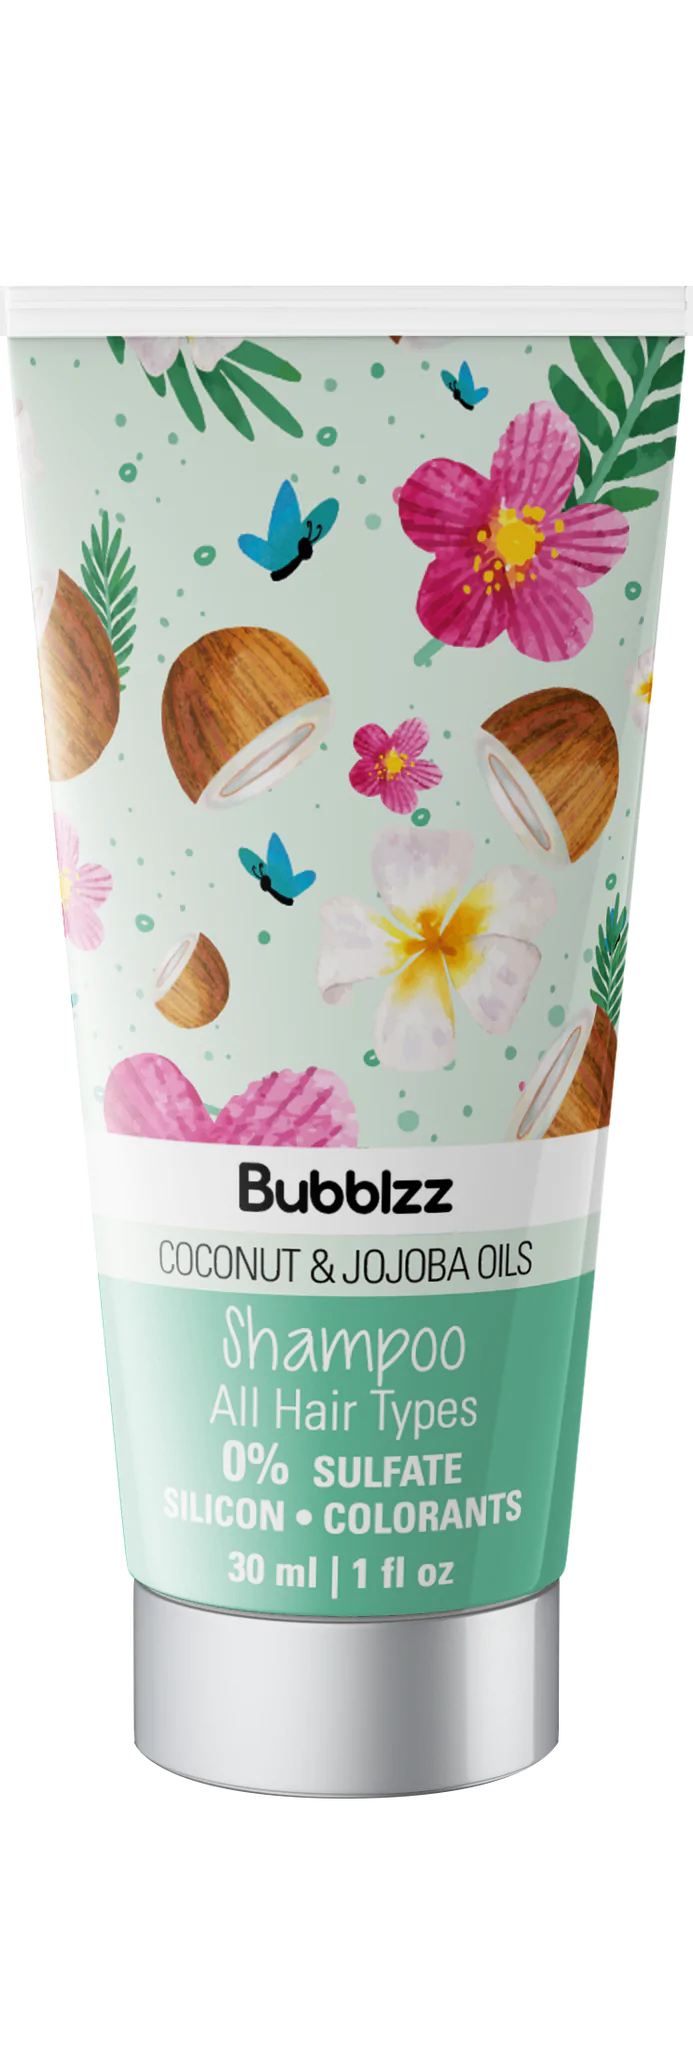 Bubblzz-Mini Shampoo For All Hair Types